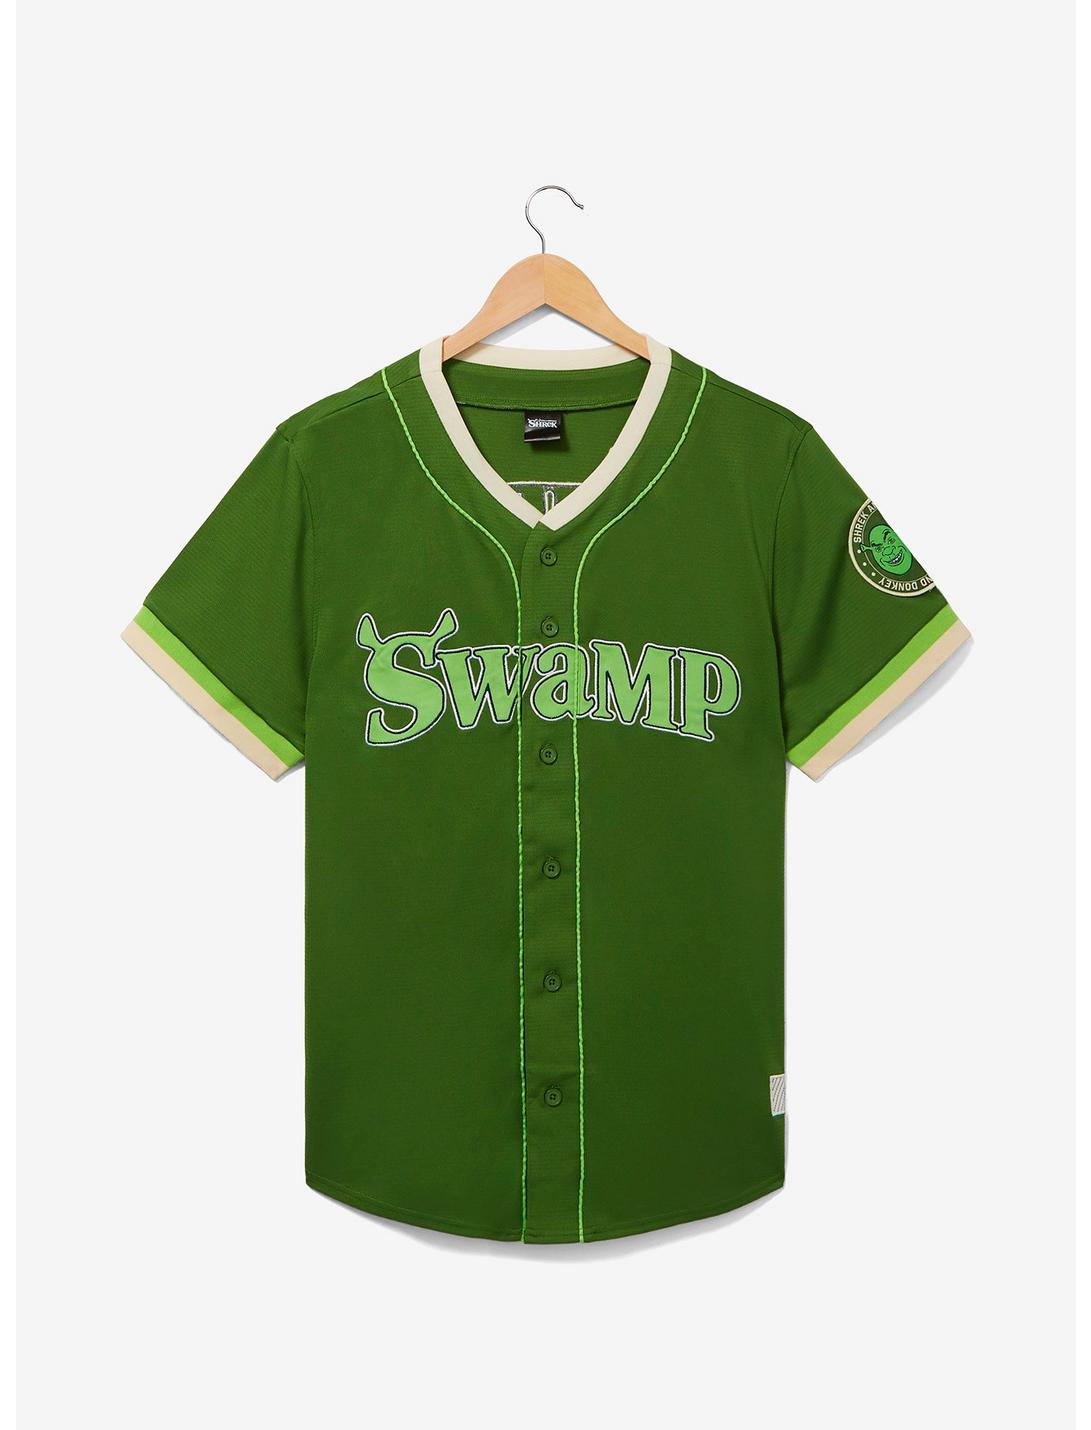 Shrek Swamp Baseball Jersey - BoxLunch Exclusive, GREEN, hi-res